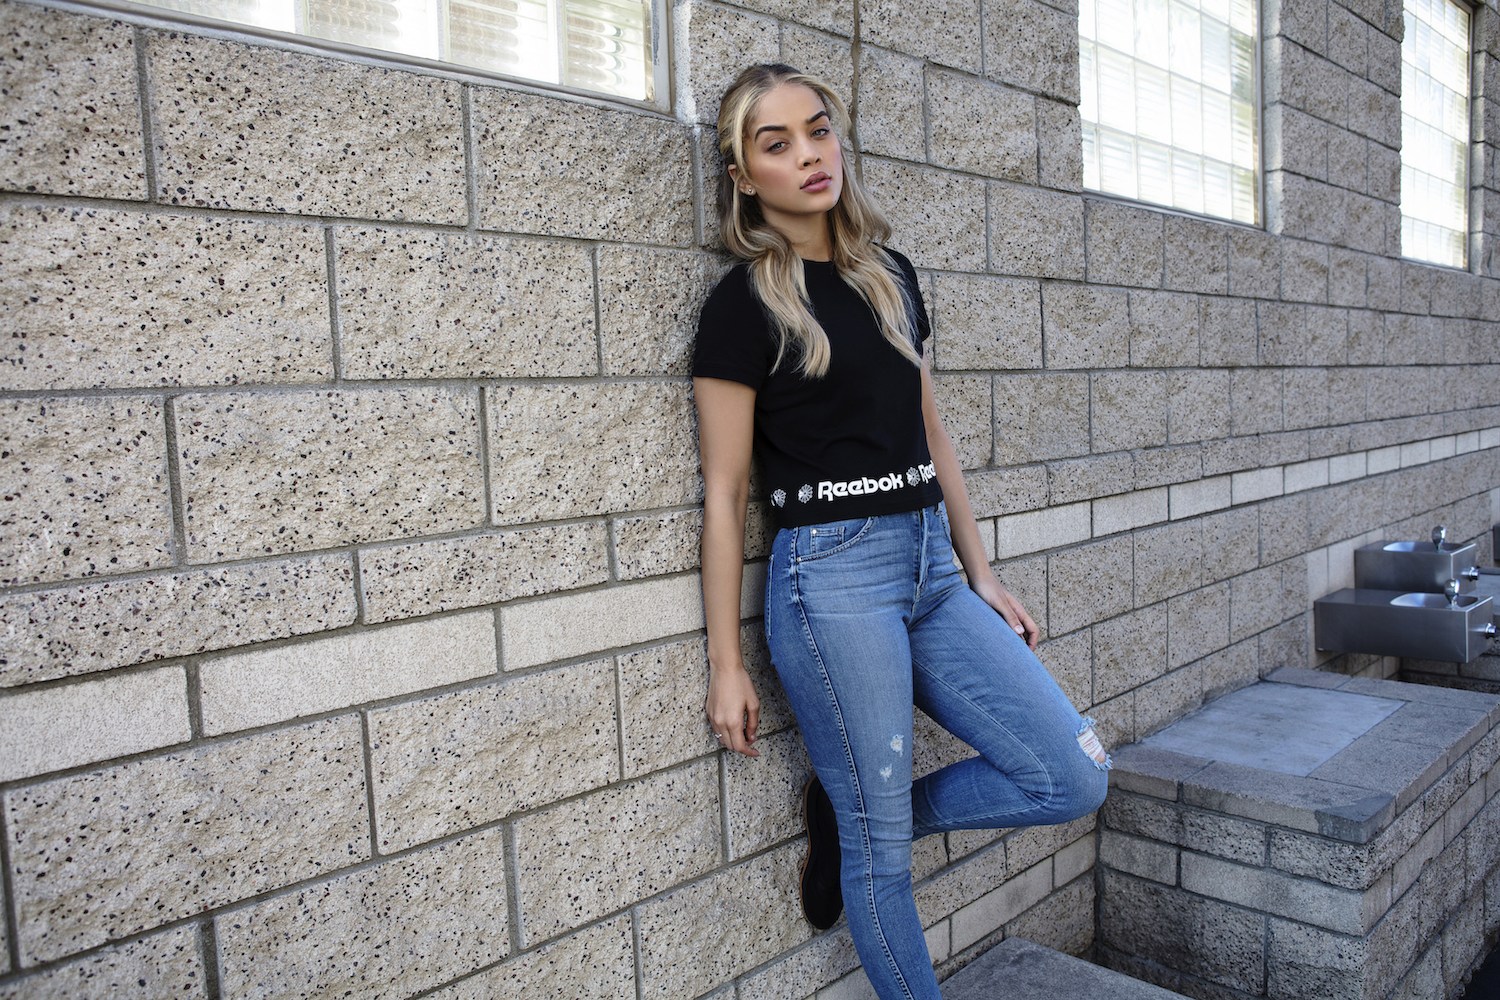 People 1500x1000 women model blonde long hair Jasmine Sanders jeans Reebok T-shirt bricks wall